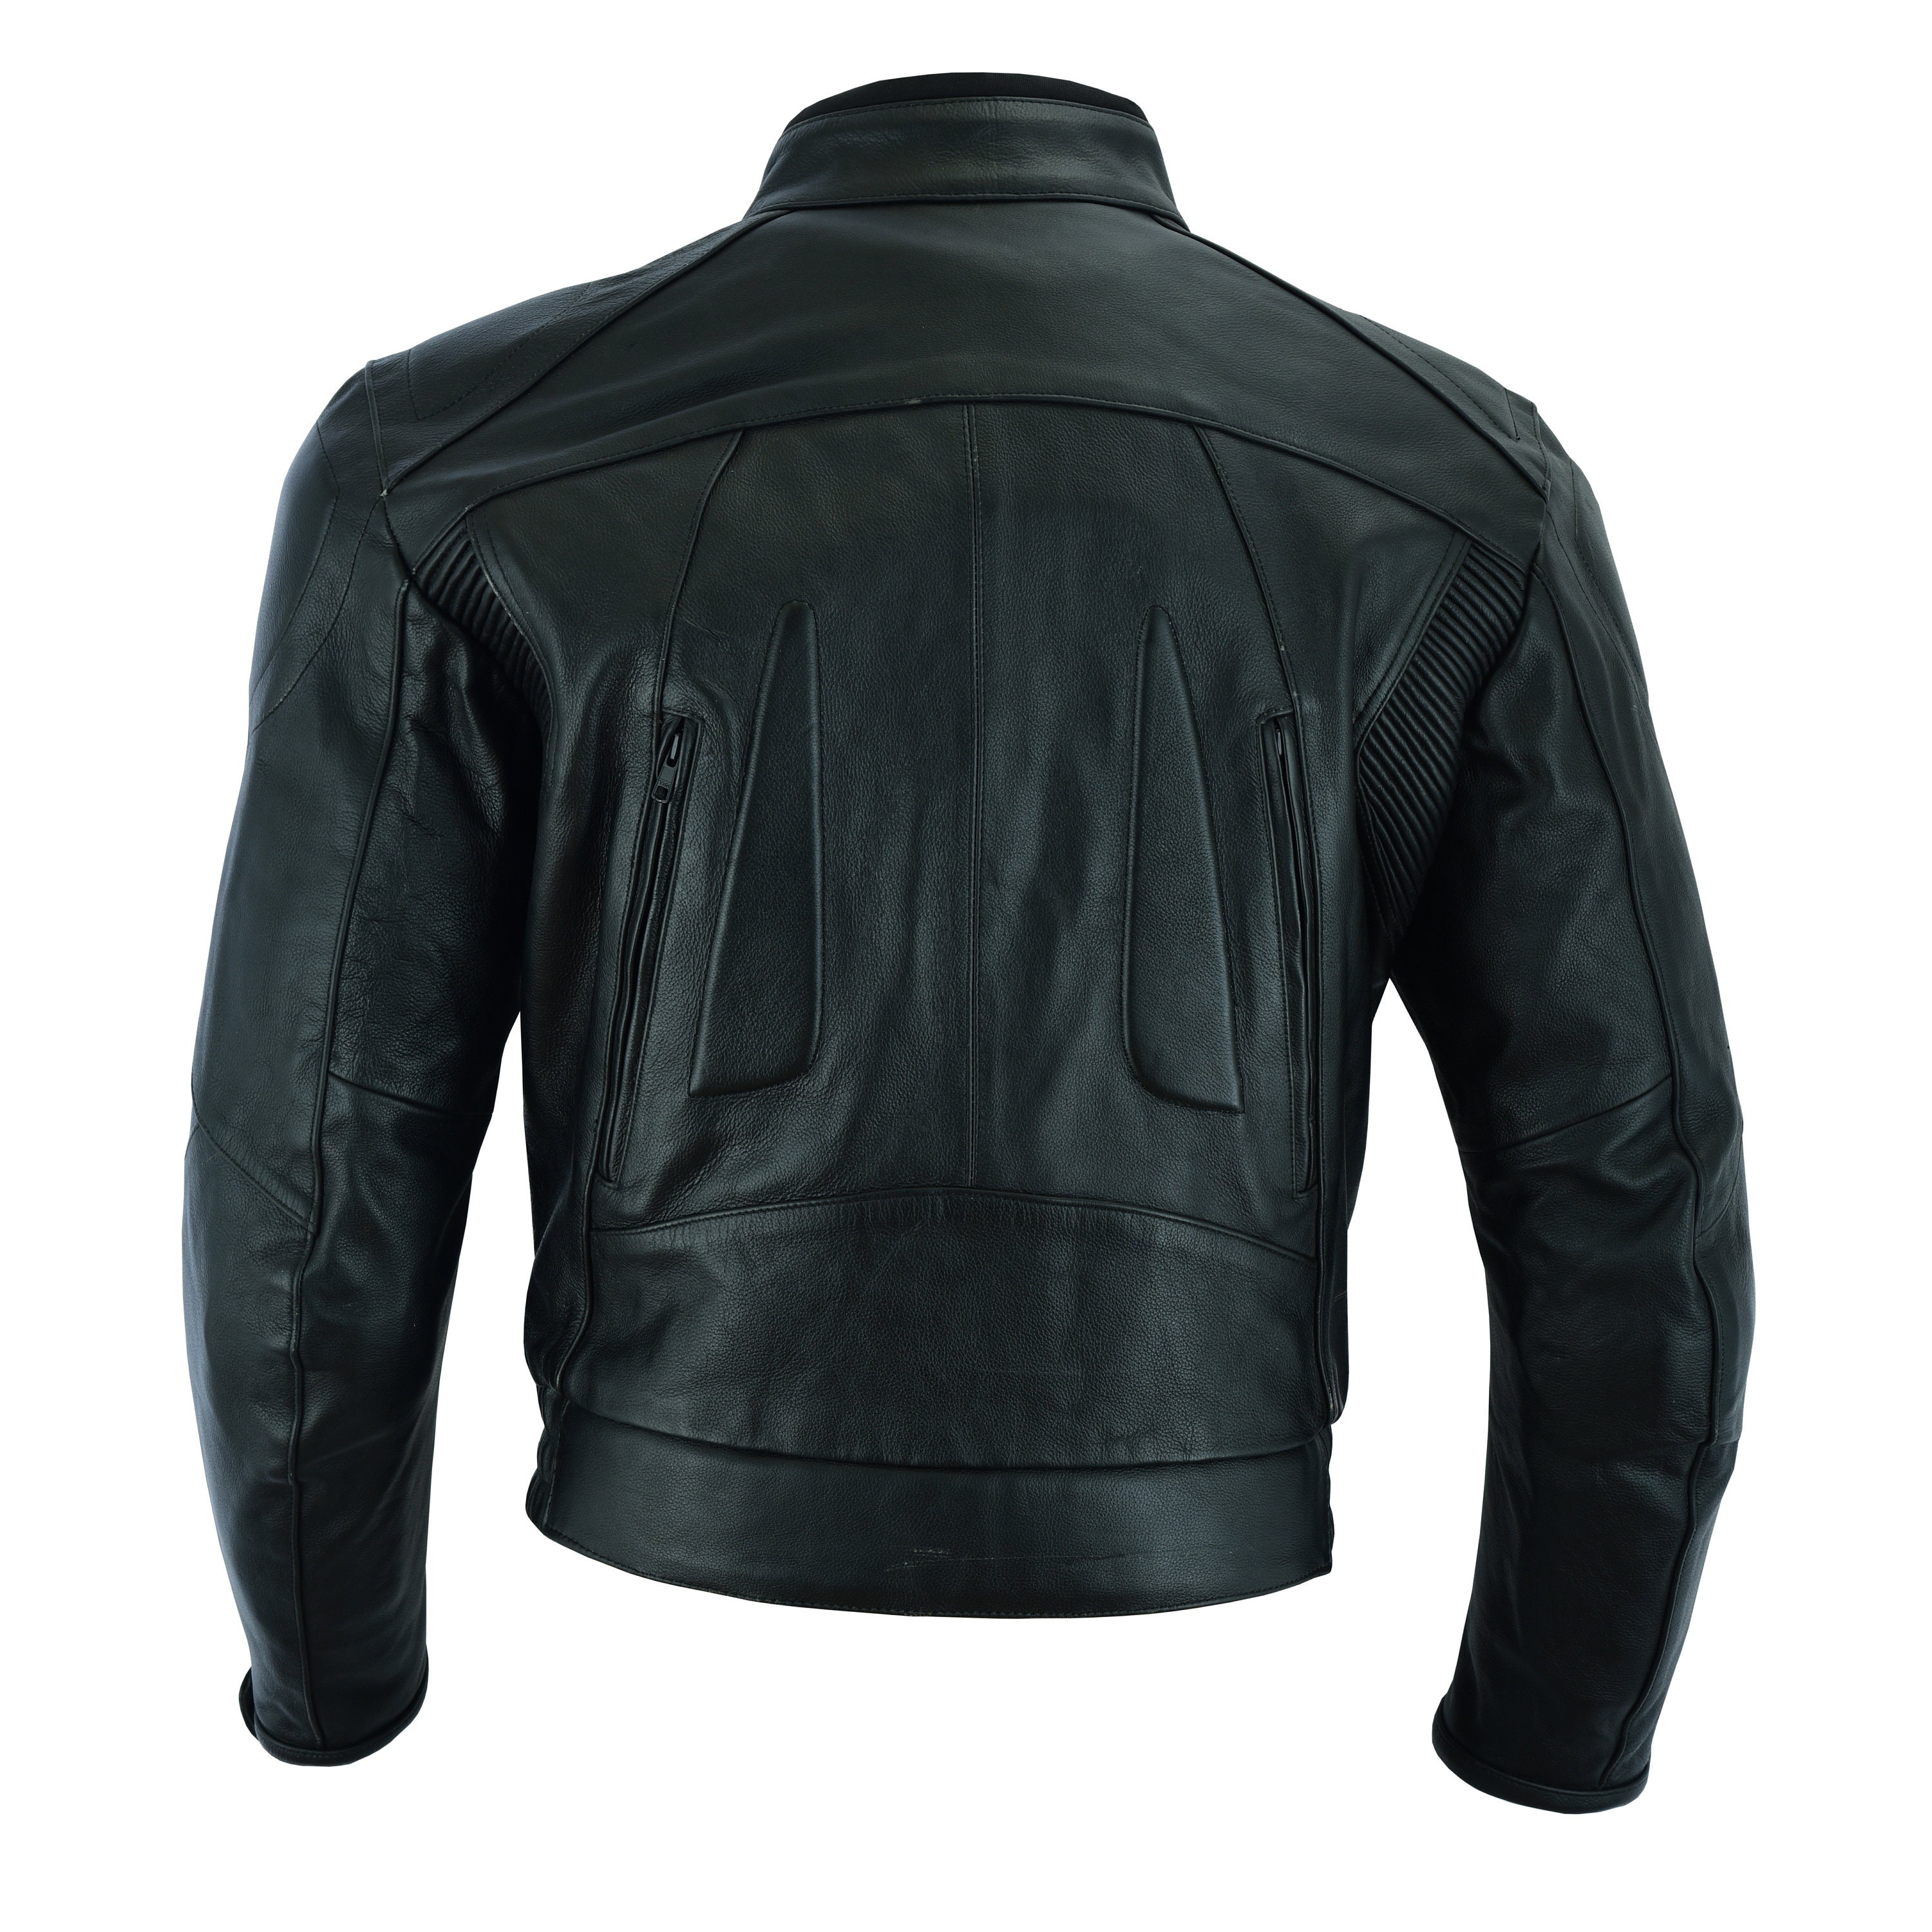 Cuircon Batman Jacket for Men Motorcycle Jacket Cow Leather Motorcycle ...